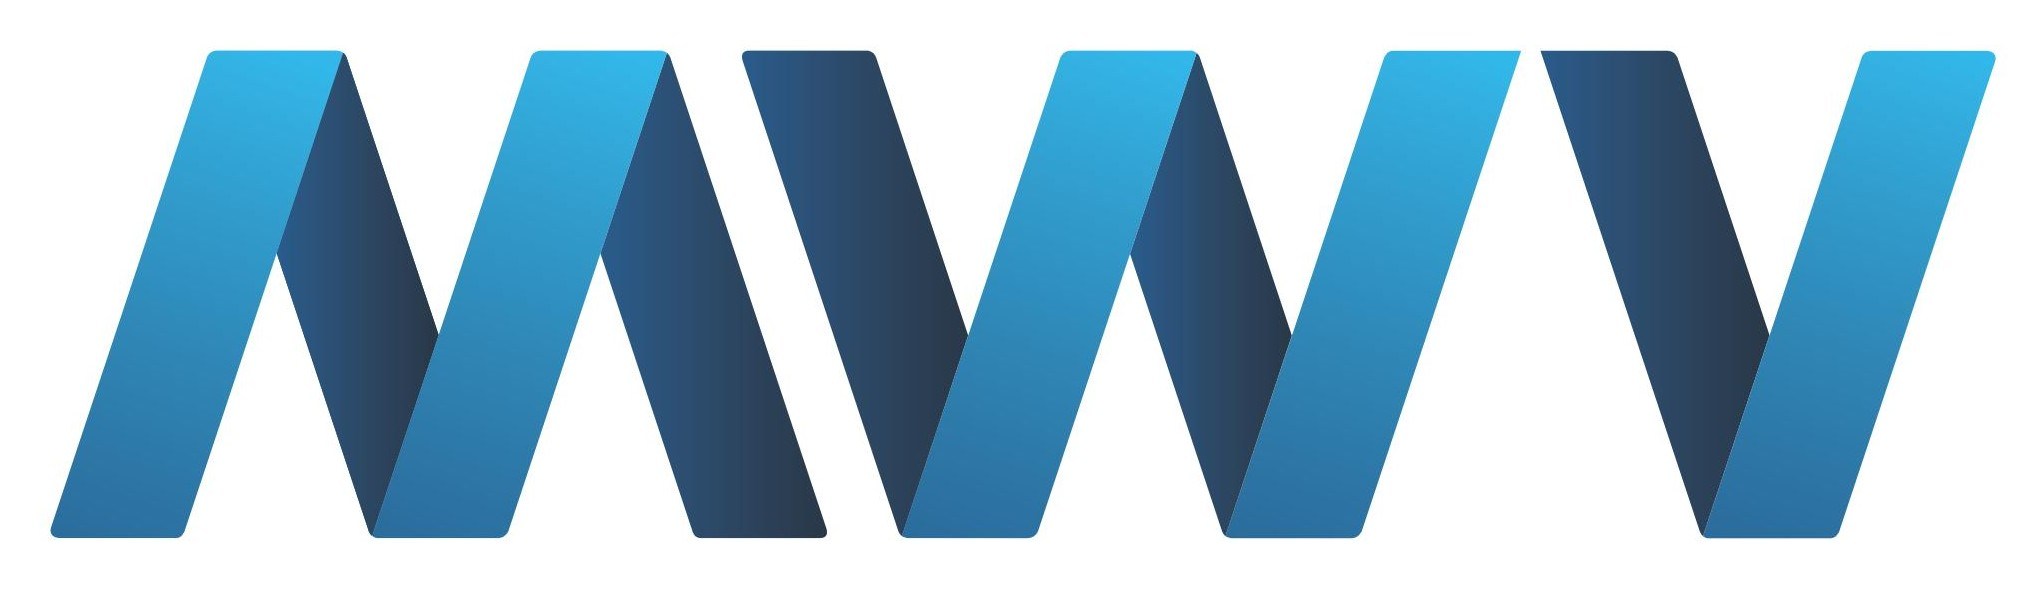 MeadWestvaco Logo [EPS File]